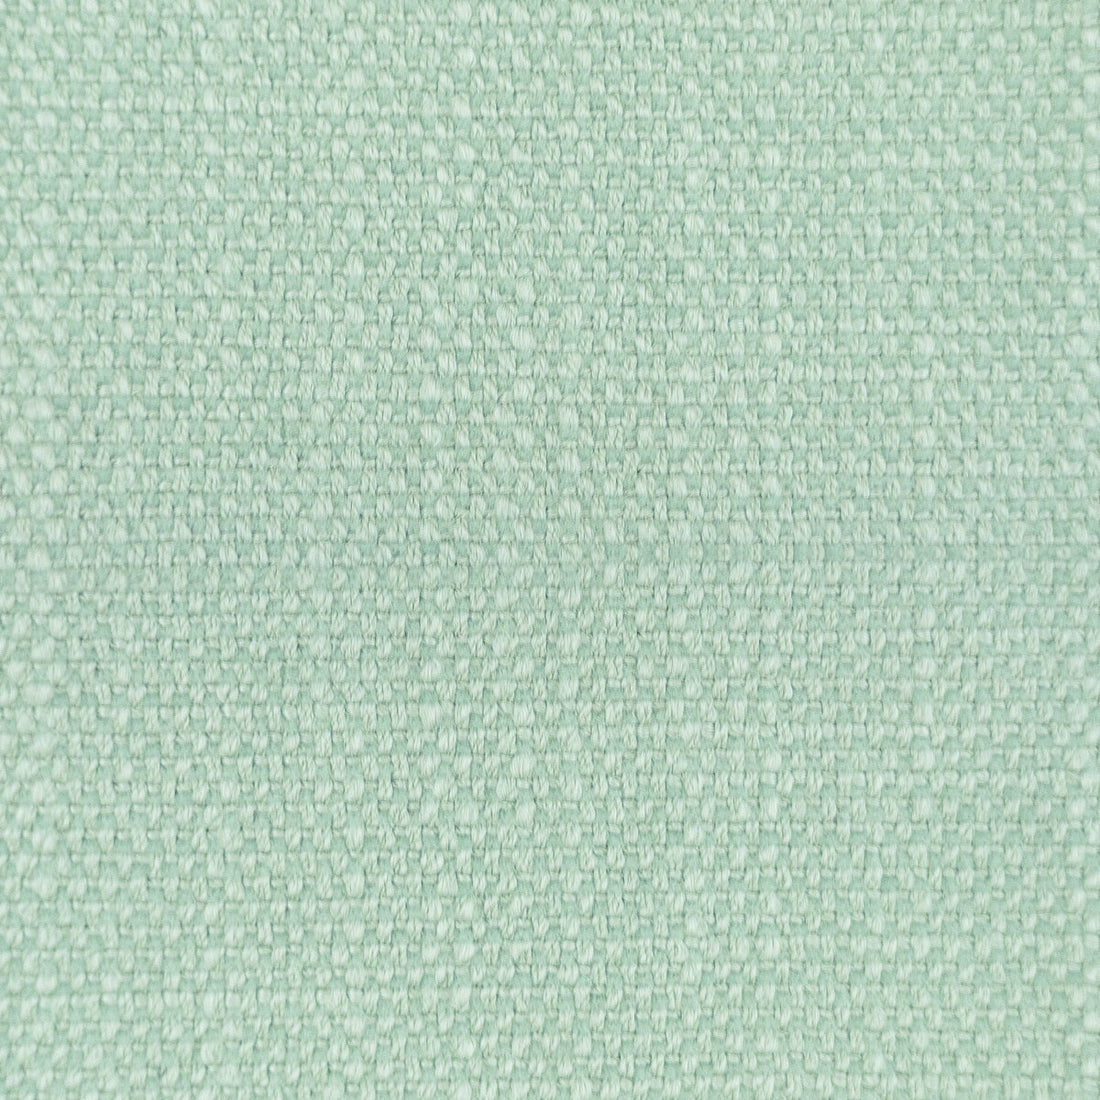 Hugo fabric in verde agua color - pattern LCT1053.014.0 - by Gaston y Daniela in the Lorenzo Castillo VI collection